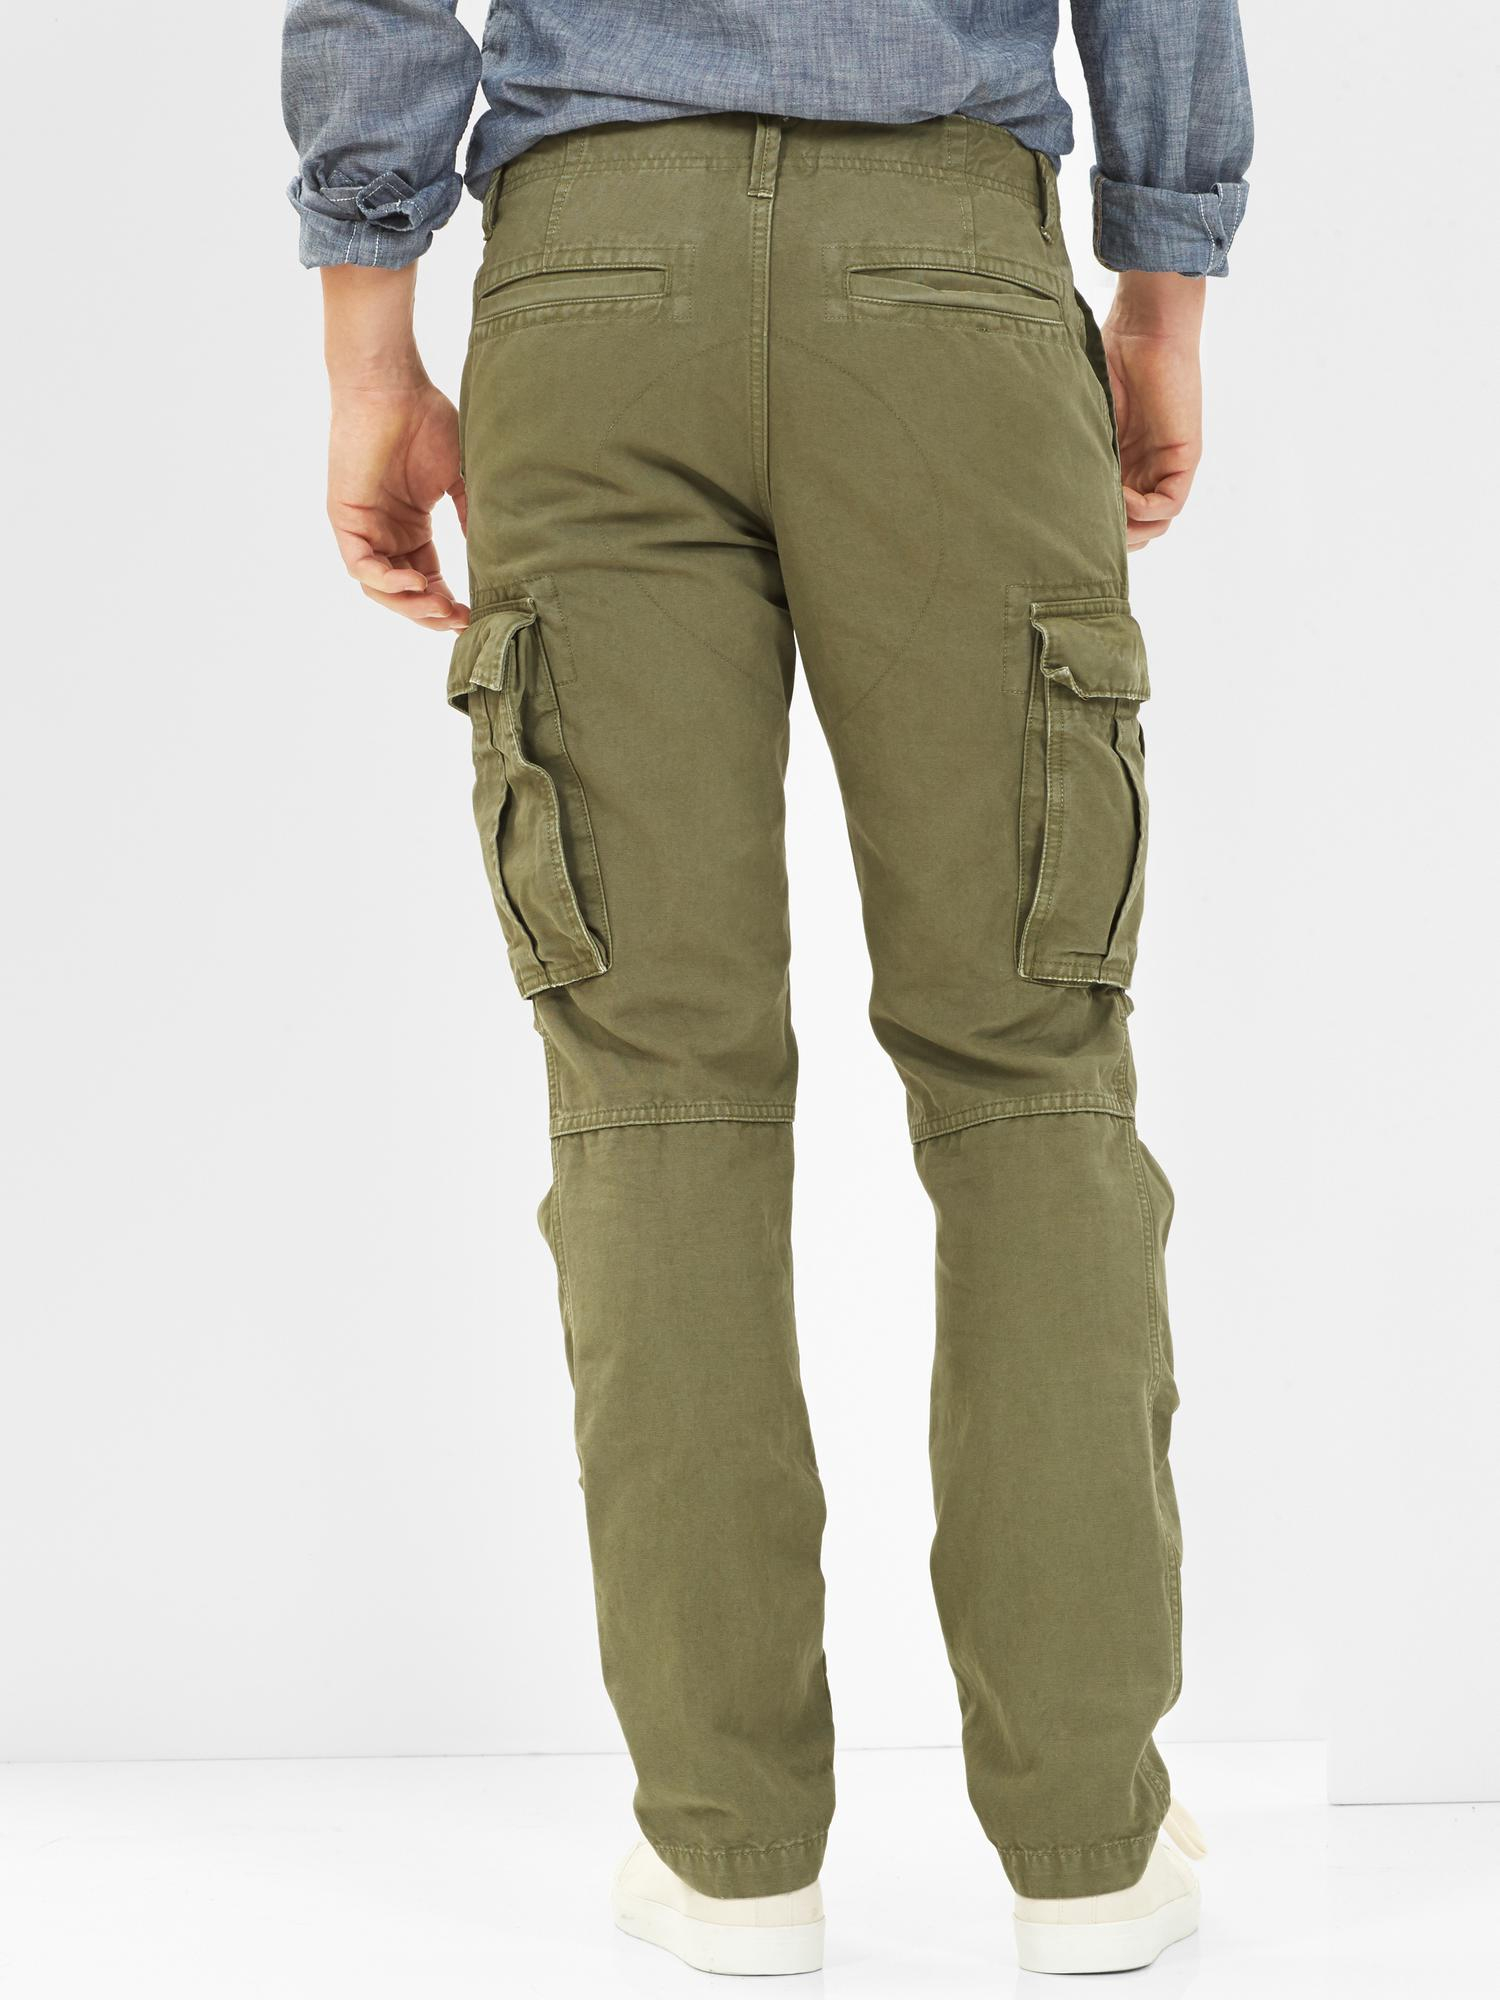 Men's Cargo Pants With Pockets ~ Cargo Pants Nike Gray Nikelab Acg Grey ...